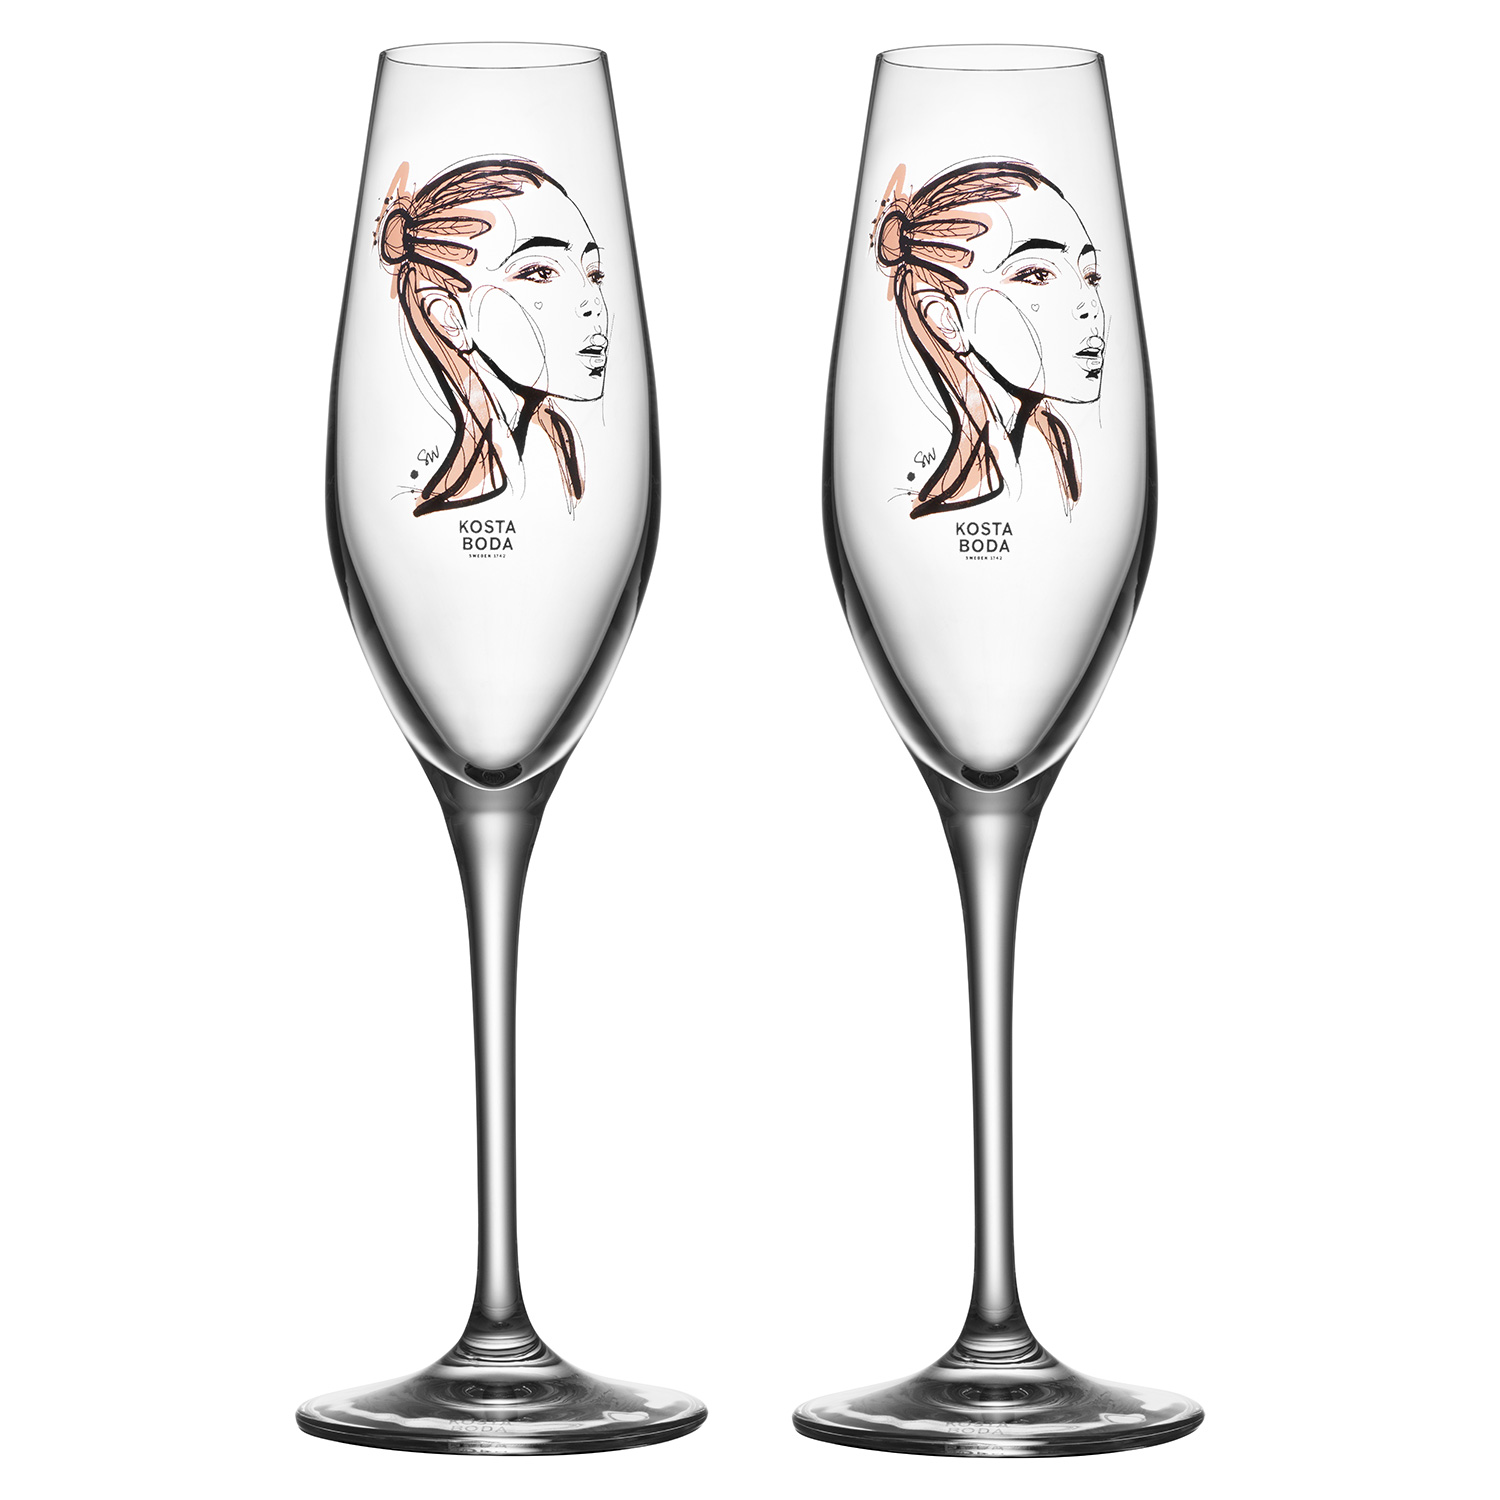 All You Champagneglas 23 2-pak, Forever Mine - Kosta Boda @ Rum21.dk